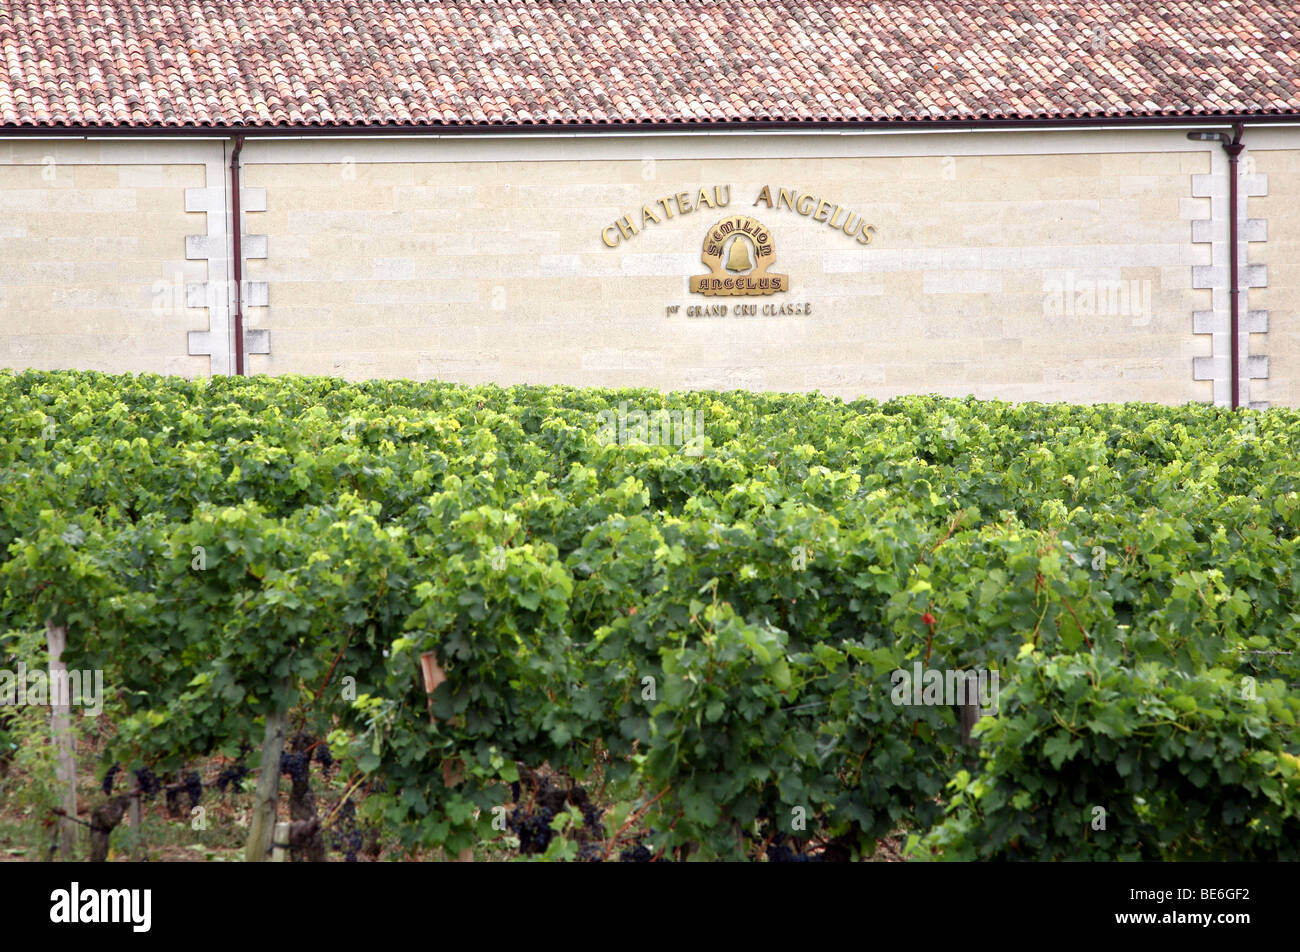 Château Angelus, berühmten Bordeaux-Wein-Produzent Stockfoto